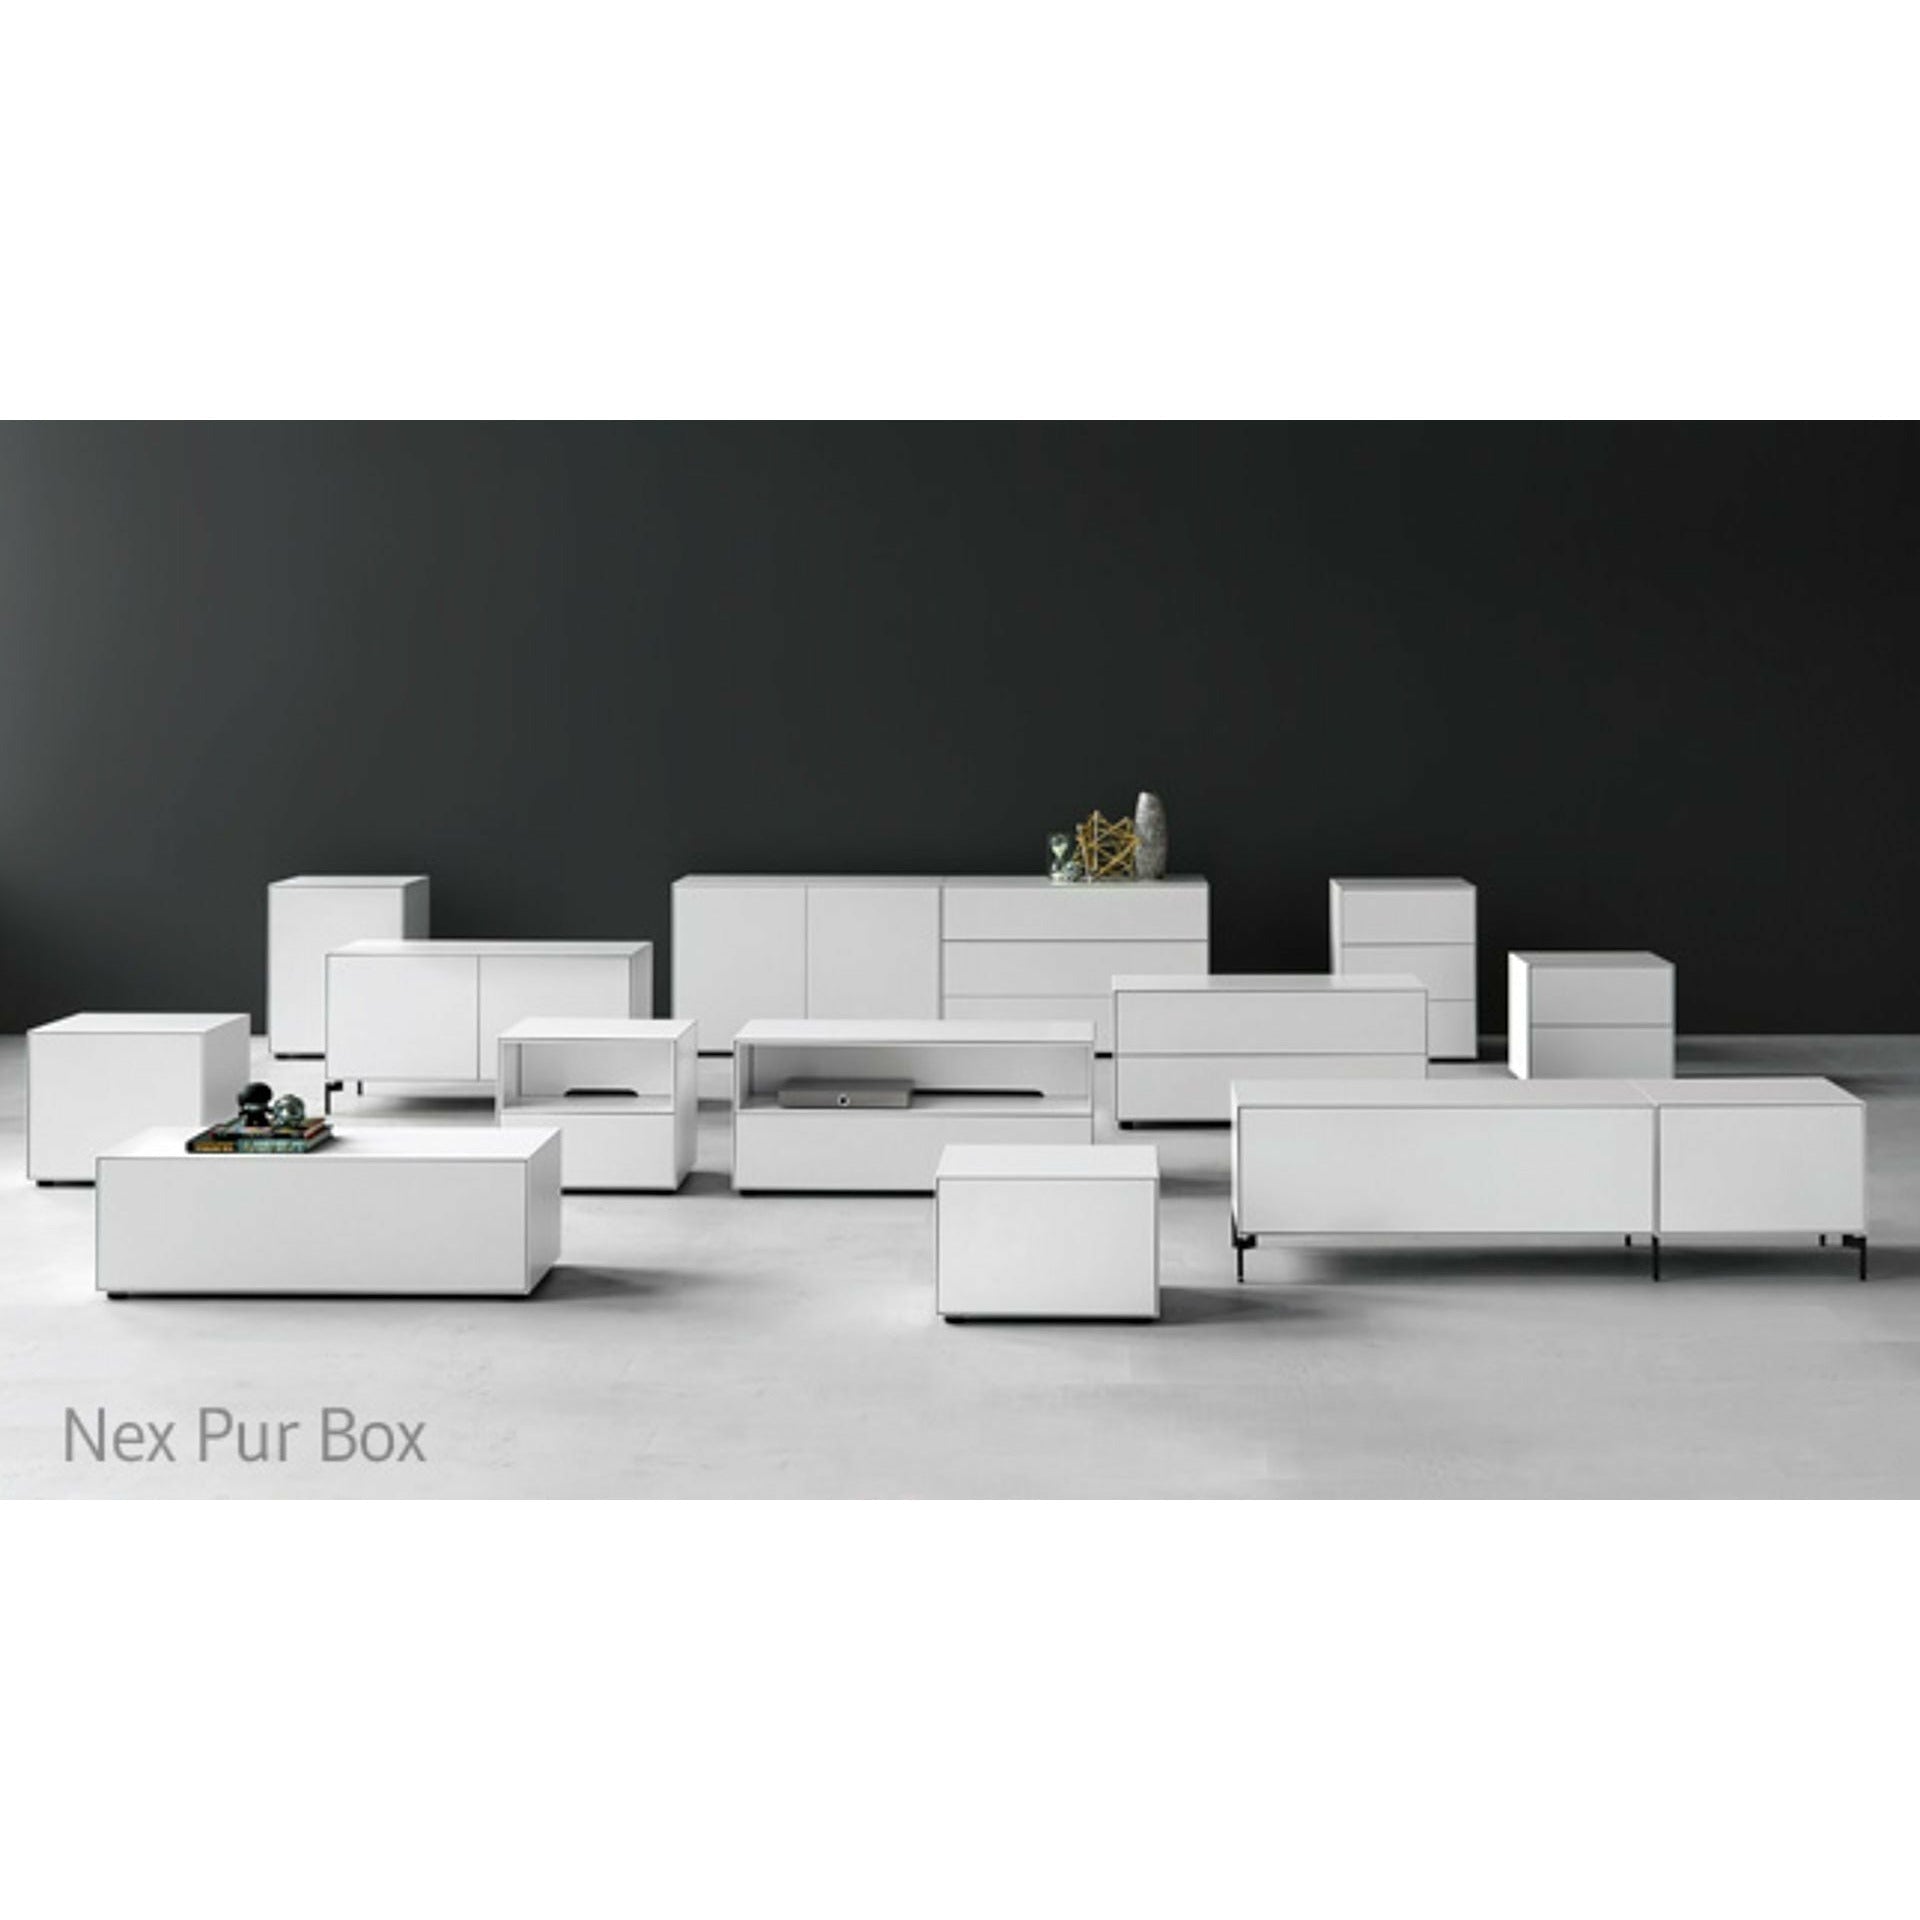 Piure Nex Pur -laatikon ovi HX W 50x120 cm, 1 hylly